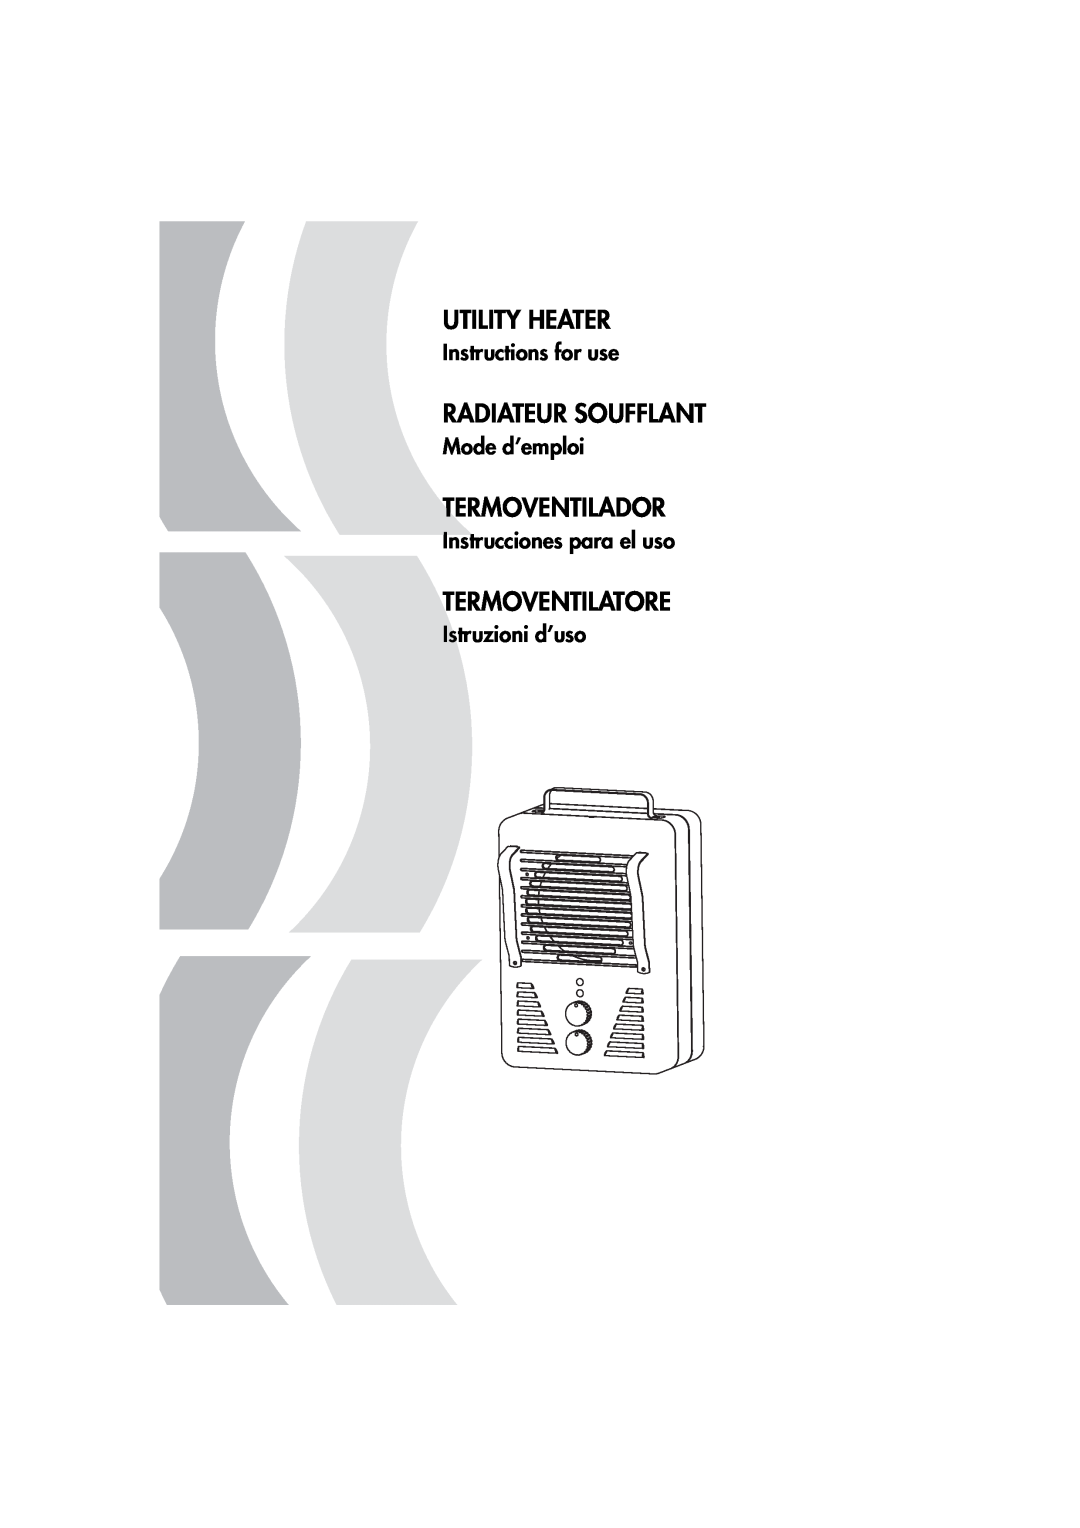 DeLonghi Utility Heater manual Radiateur Soufflant, Termoventilador, Termoventilatore, Instructions for use, Mode d’emploi 